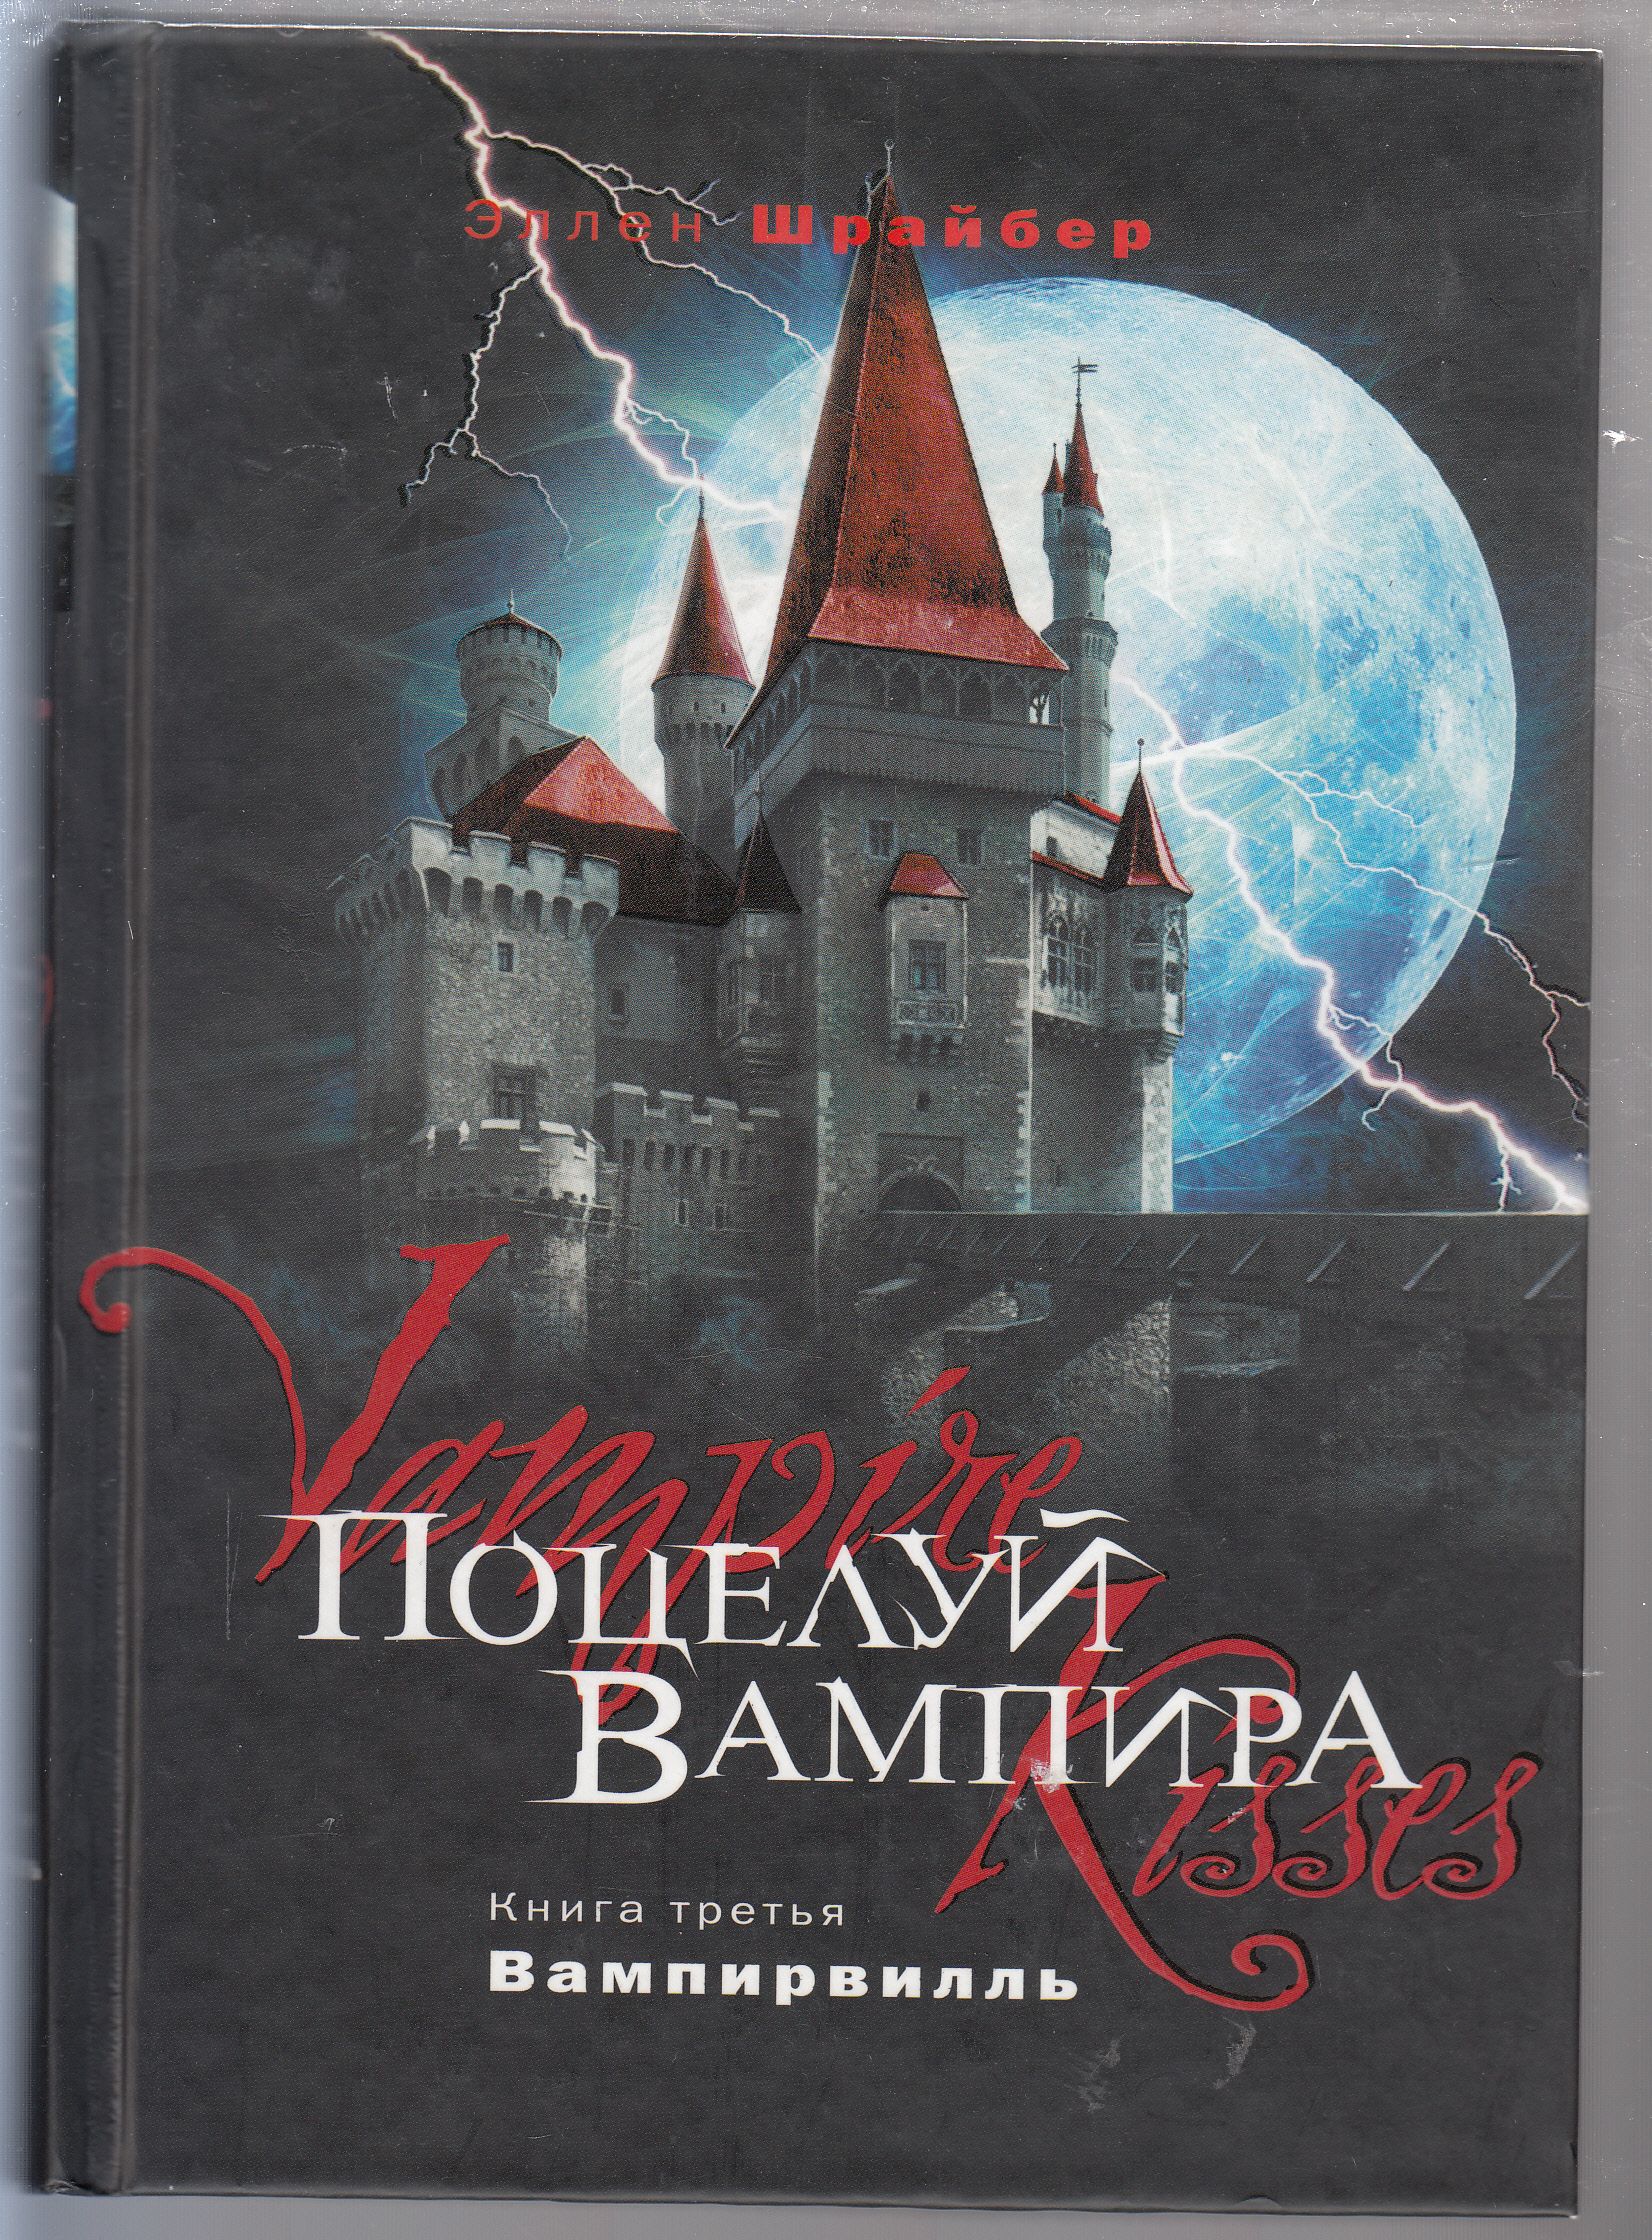 Поцелуй вампира книга. Эллен Шрайбер поцелуй вампира. Обложки книг про вампиров. Поцелуй вампира книга Эллен Шрайбер.